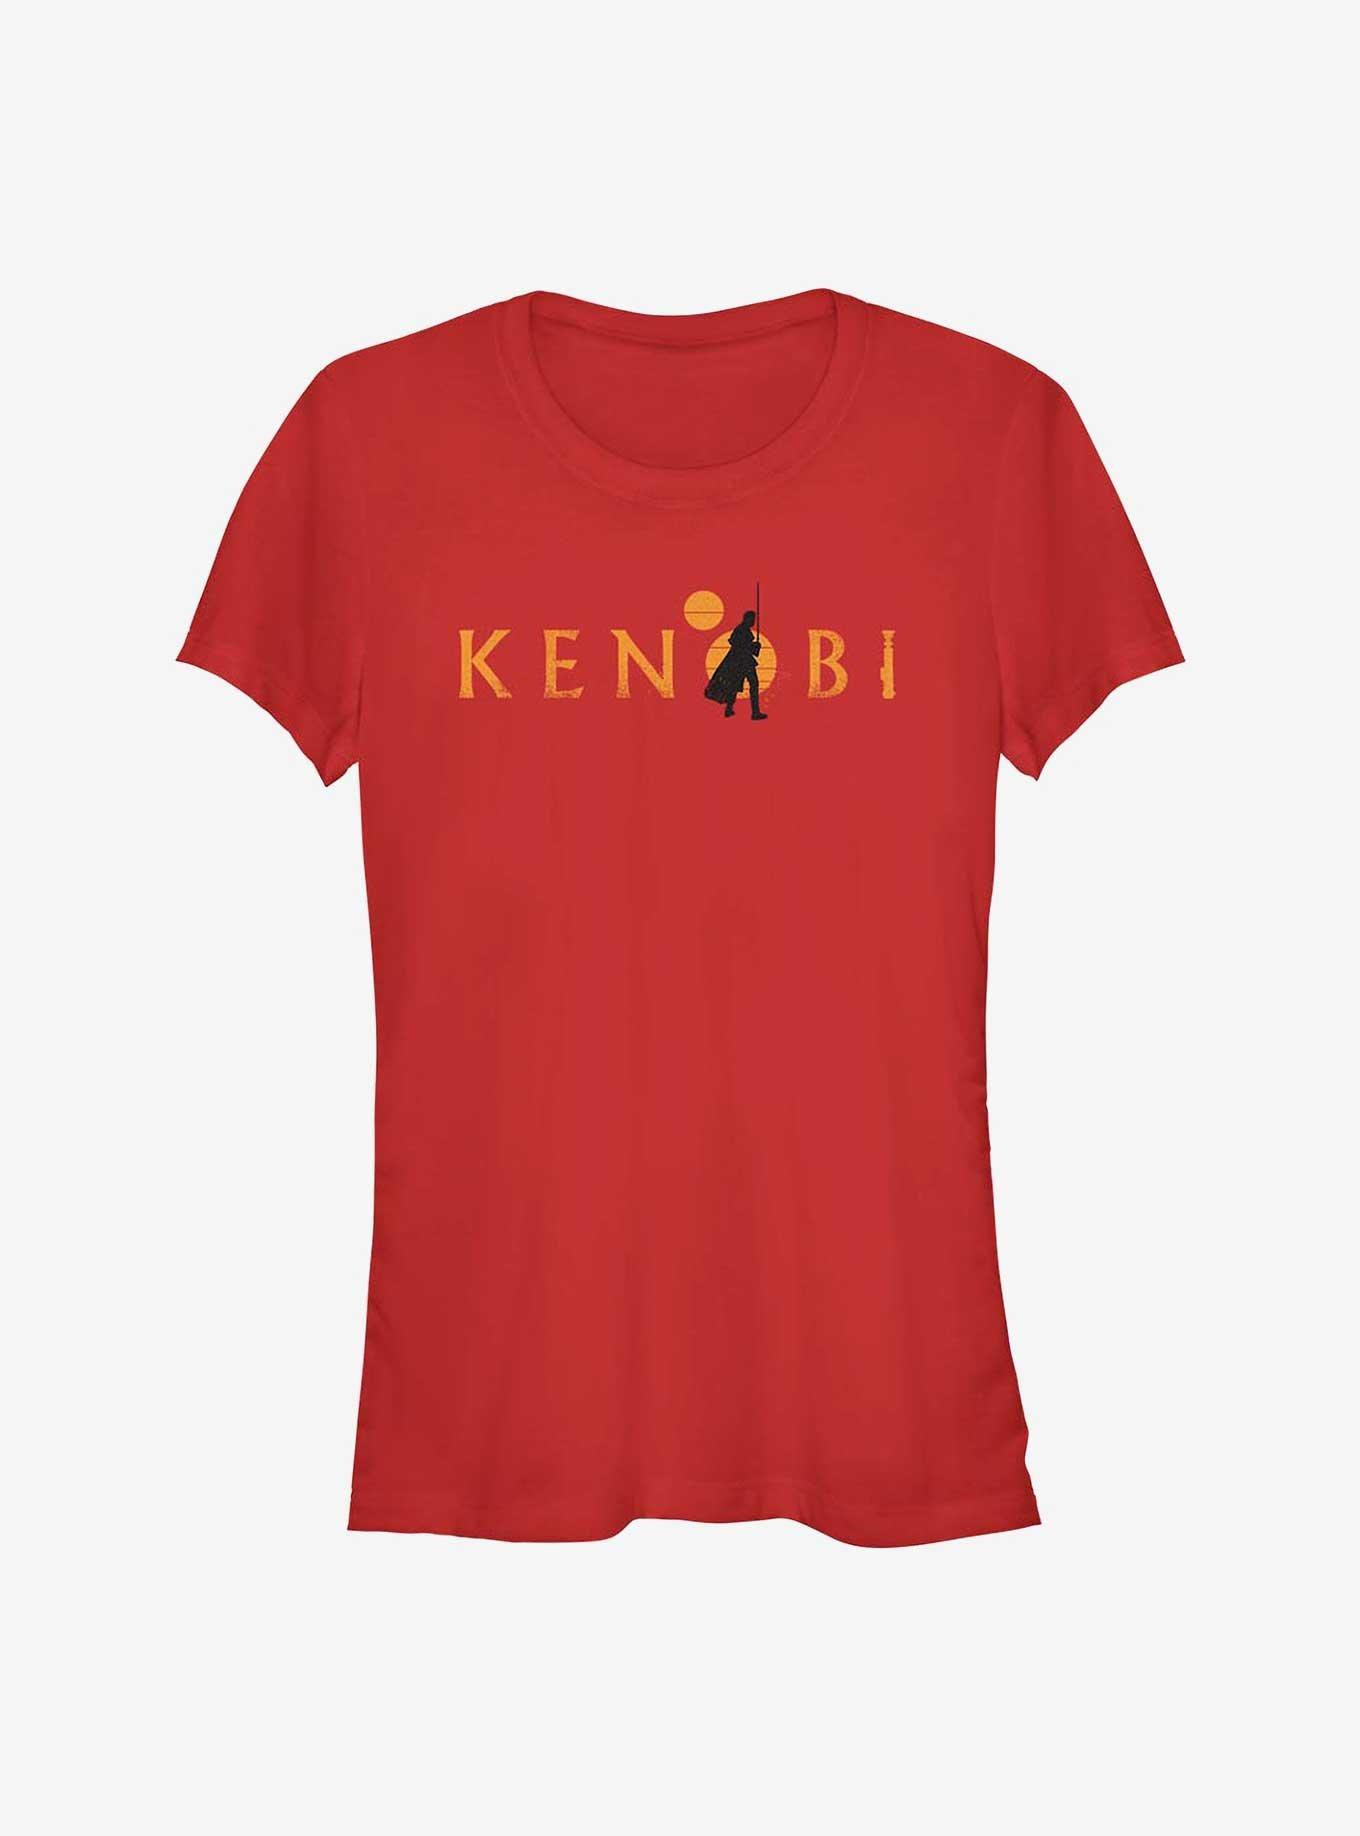 Star Wars Obi-Wan Kenobi Two Suns Logo Girls T-Shirt